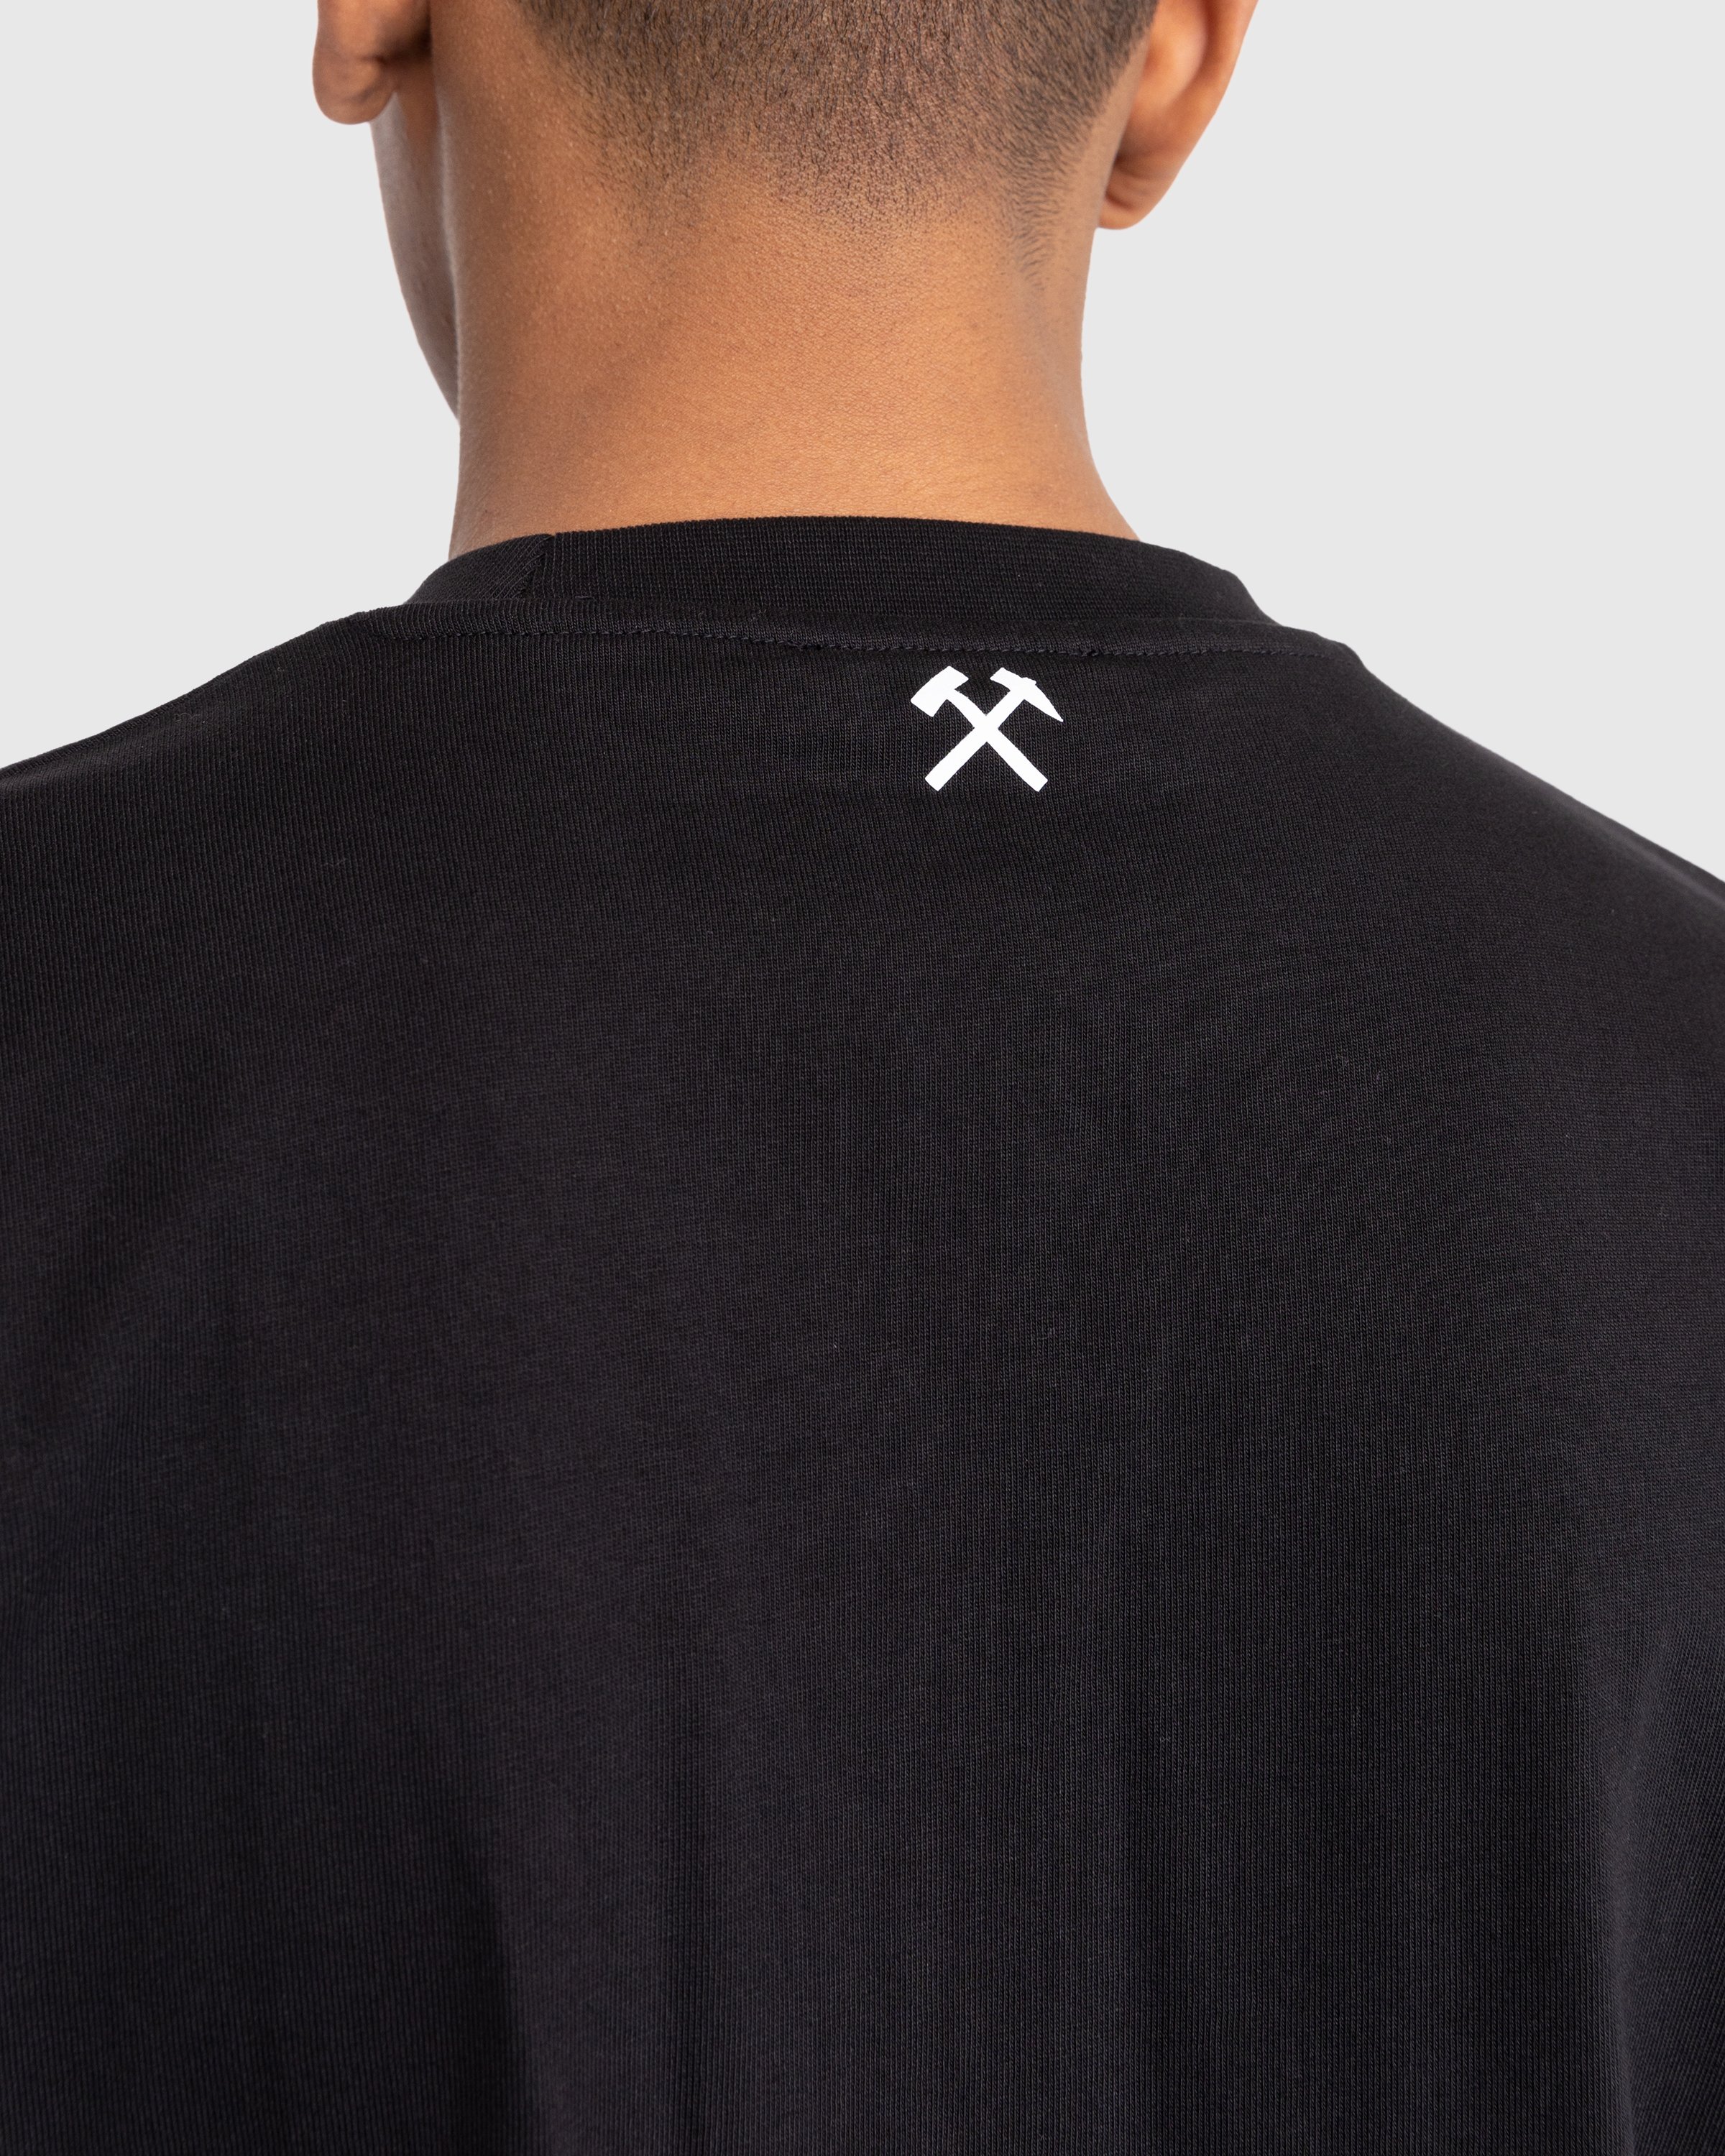 GmbH - Logo T-Shirt Black/White - Clothing - Black - Image 6